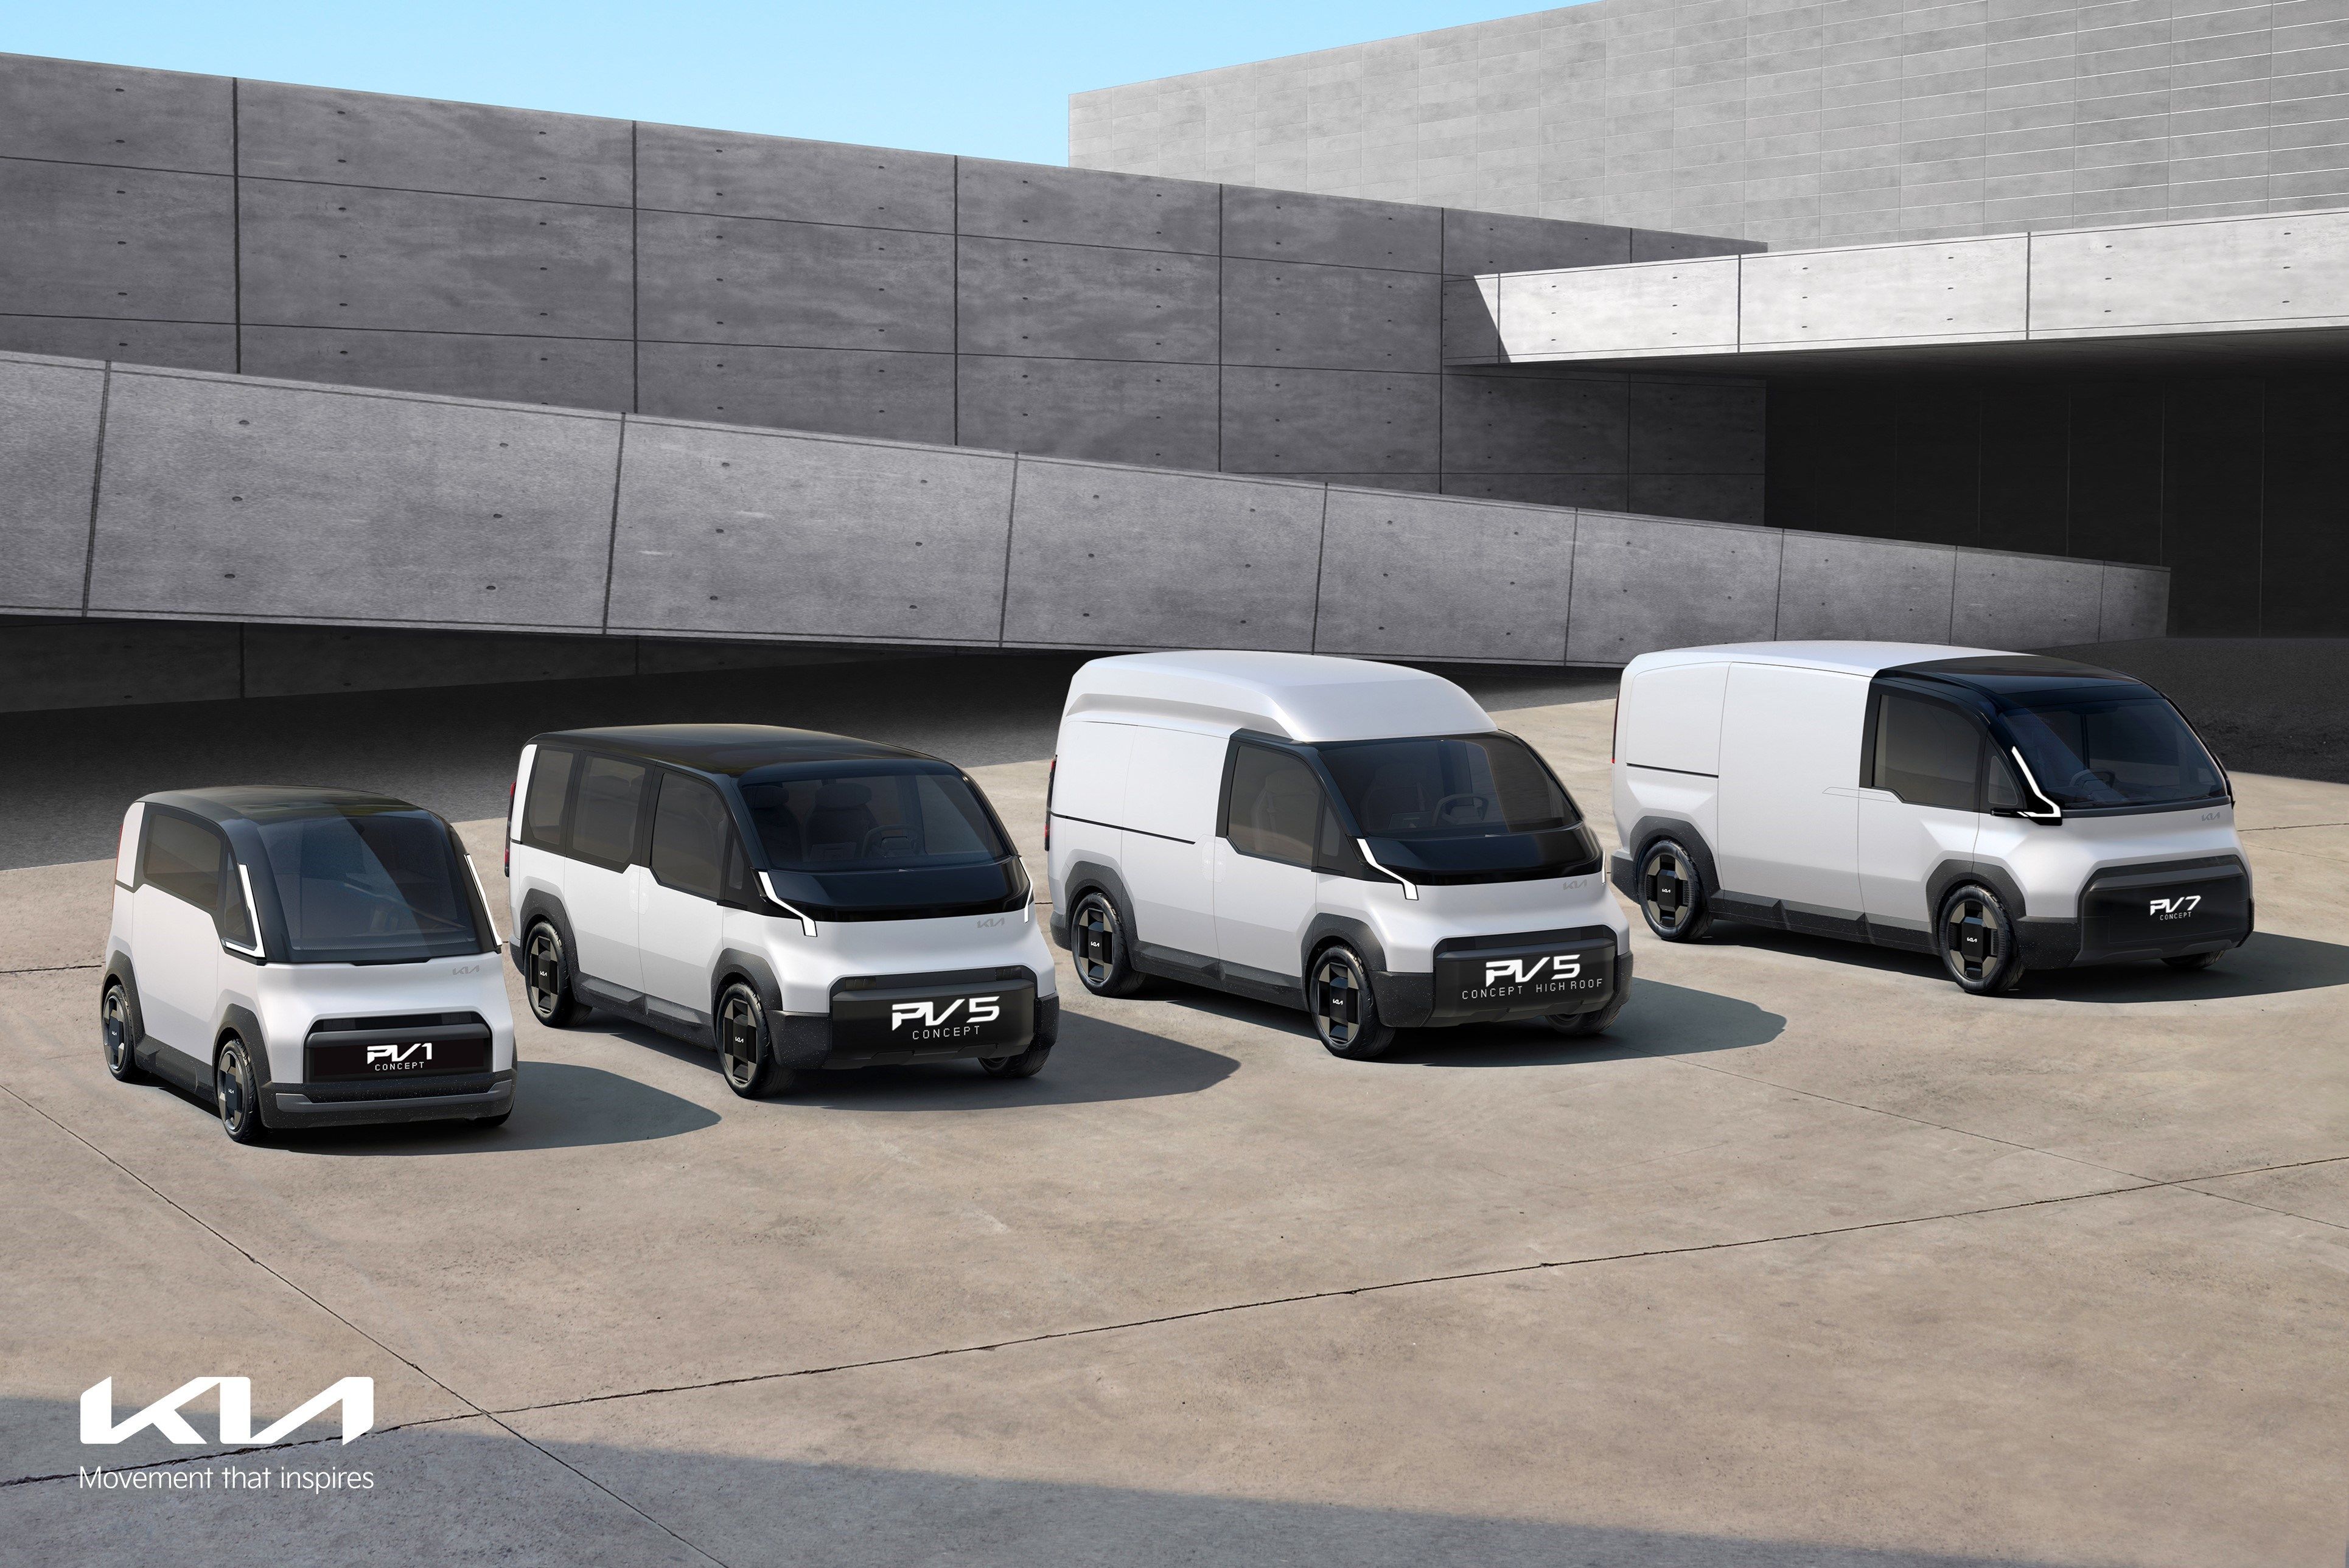 Kia's PBV electric van concepts have interchangeable bodies. 